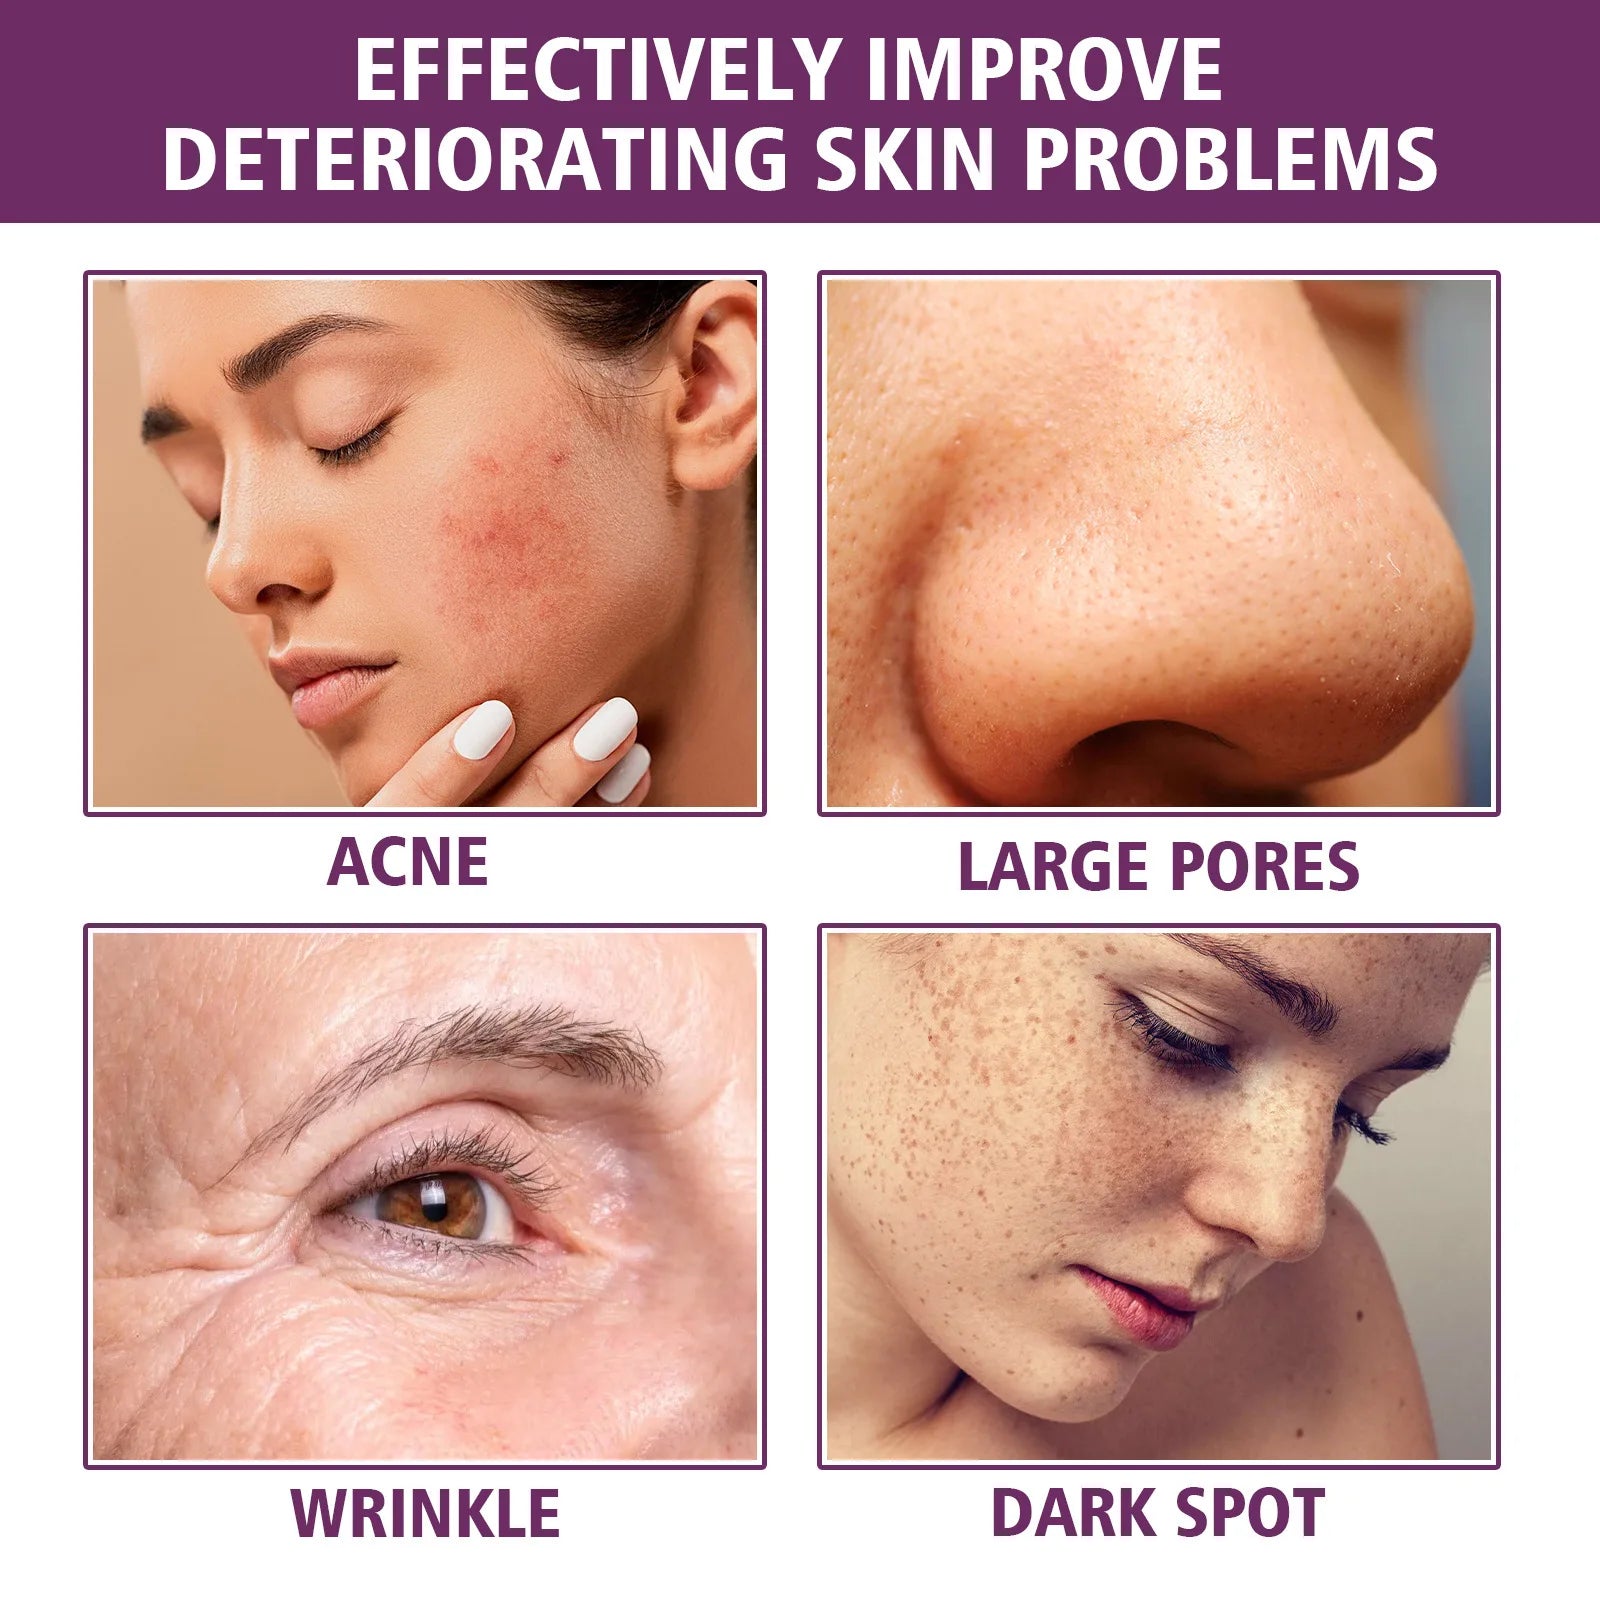 Niacinamide Face Serum Face Pigment Dark Spot Remover Purify Acne Marks Reduce Fine Lines Enhance Elasticity Restoring Essence